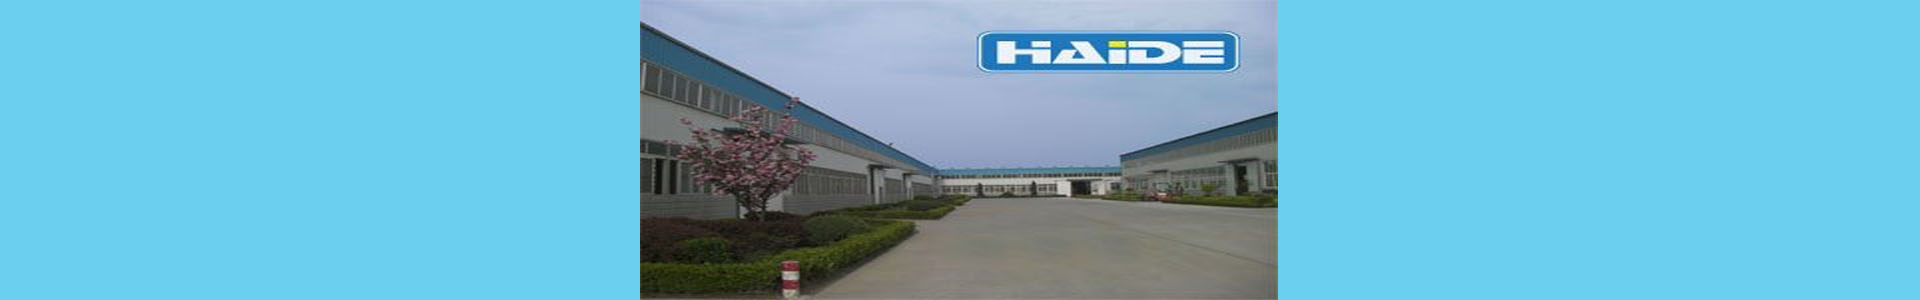 Laizhou Haide Machinery Co., Ltd.